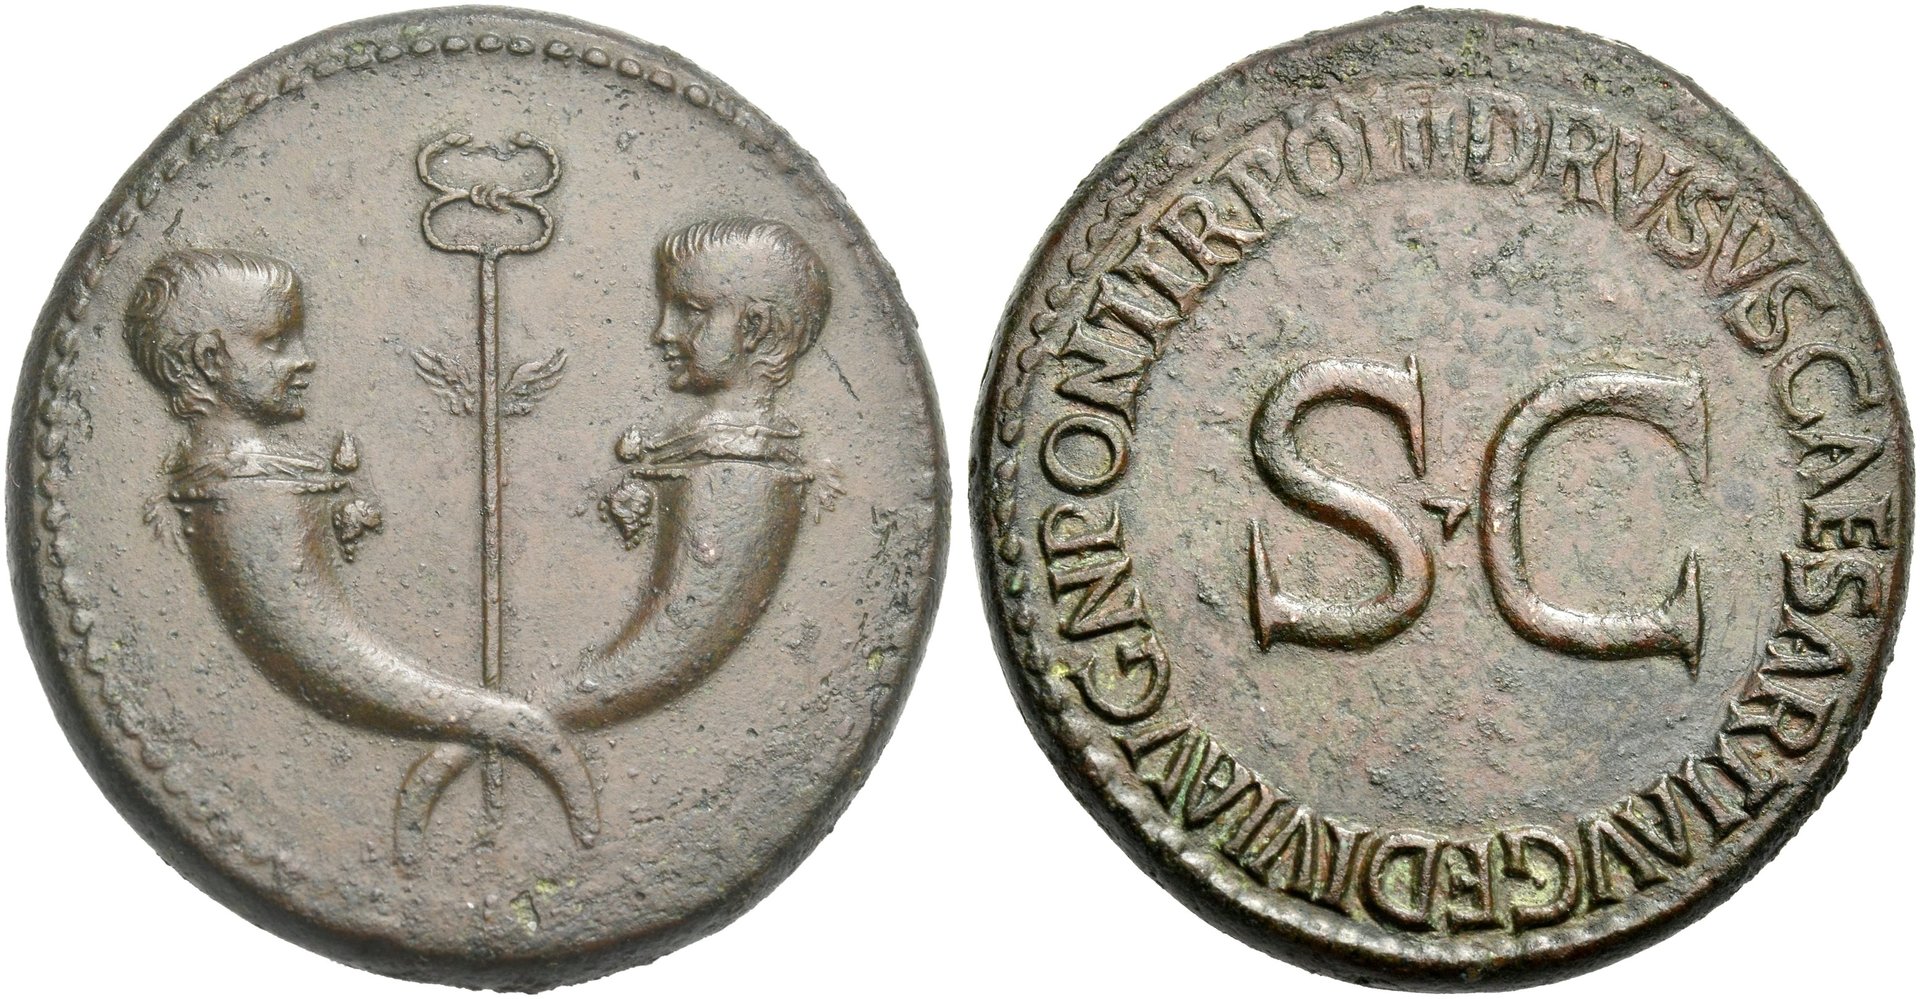 Drusus son of Tiberius sestertius with crossed cornucopiae, sold May 2020 at NAC auction.jpg